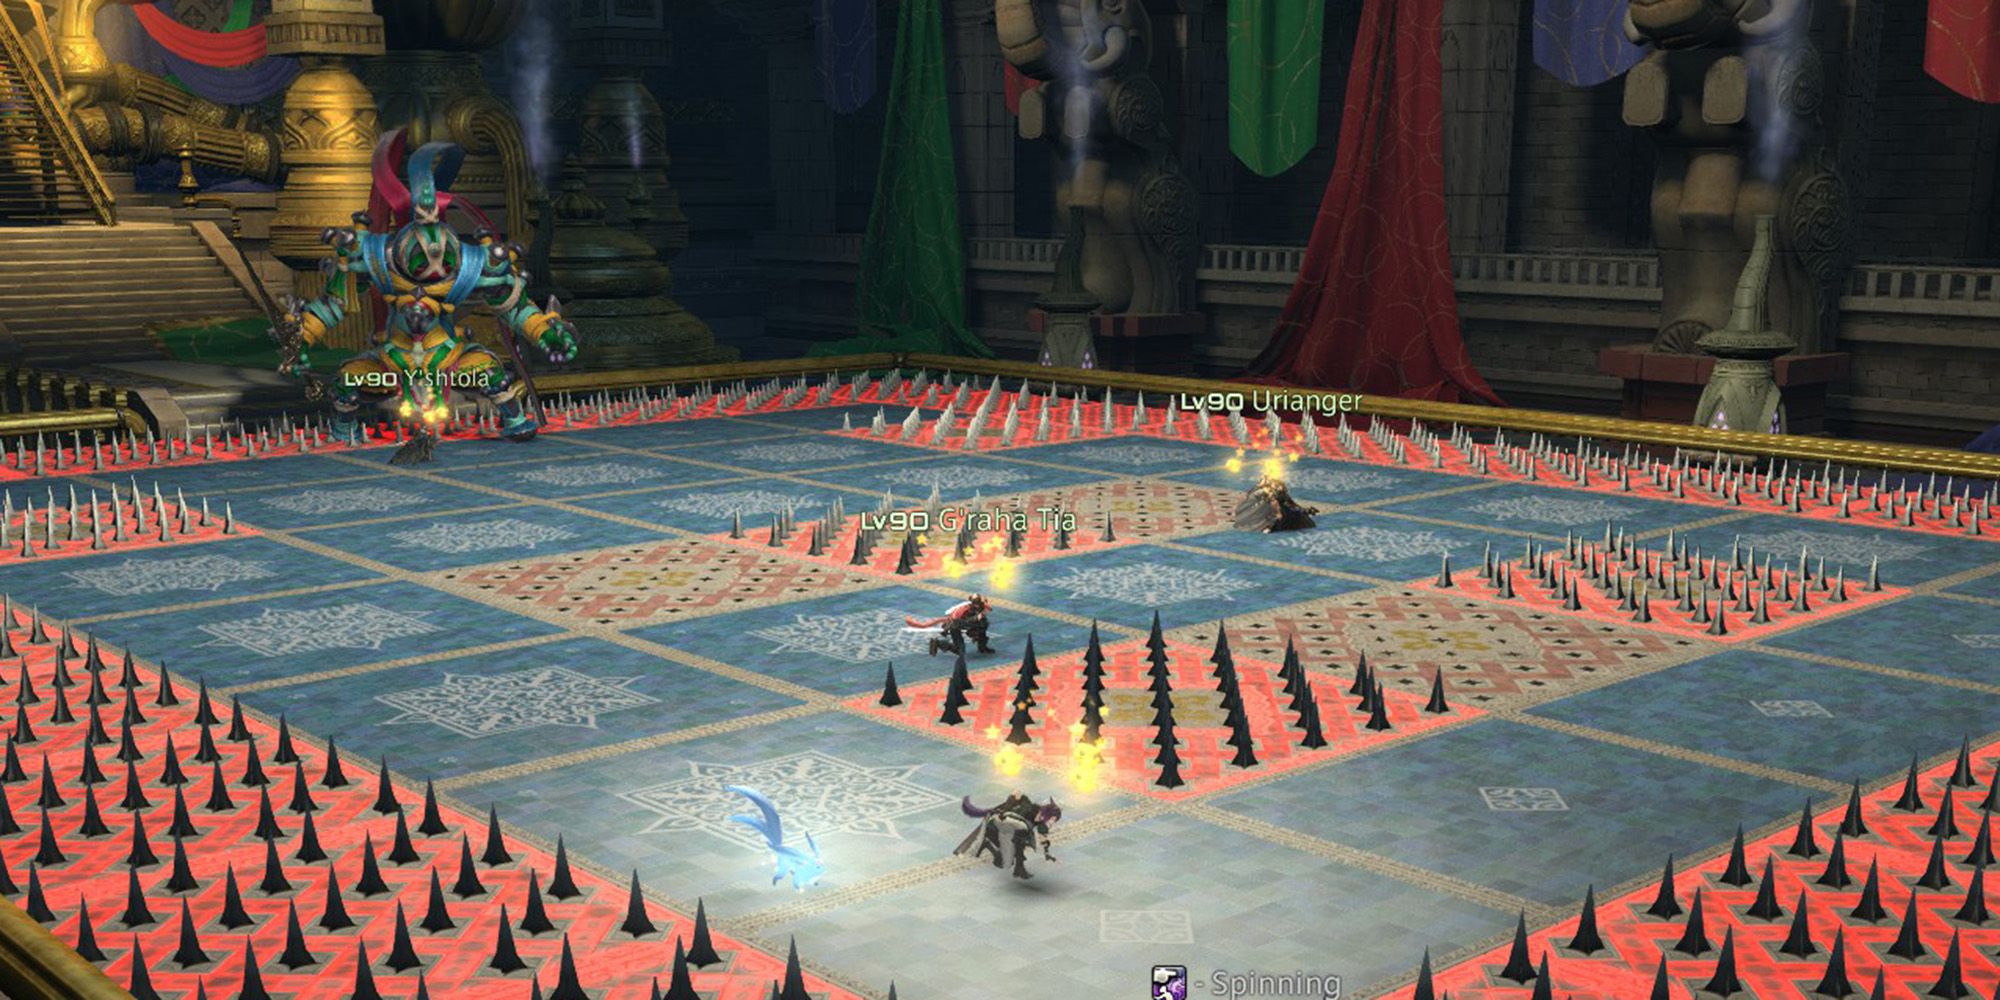 kapikulu causing players to spin out, avoiding spikes around arena